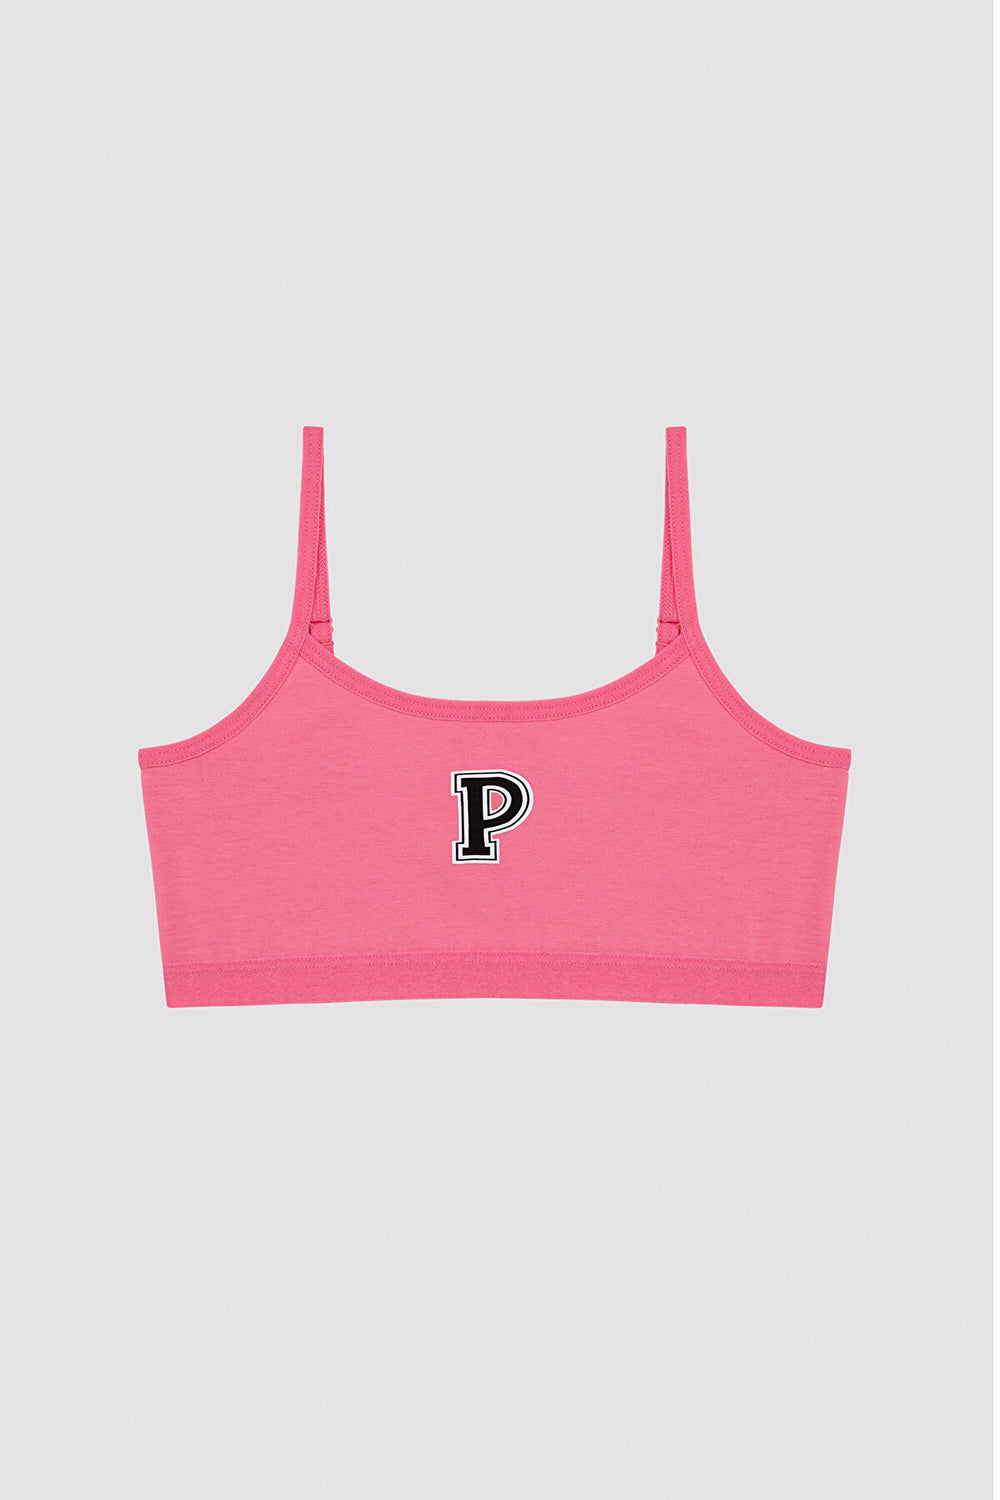 Pink Victoria Secret Ultimate Lightly Lined Sports Bra